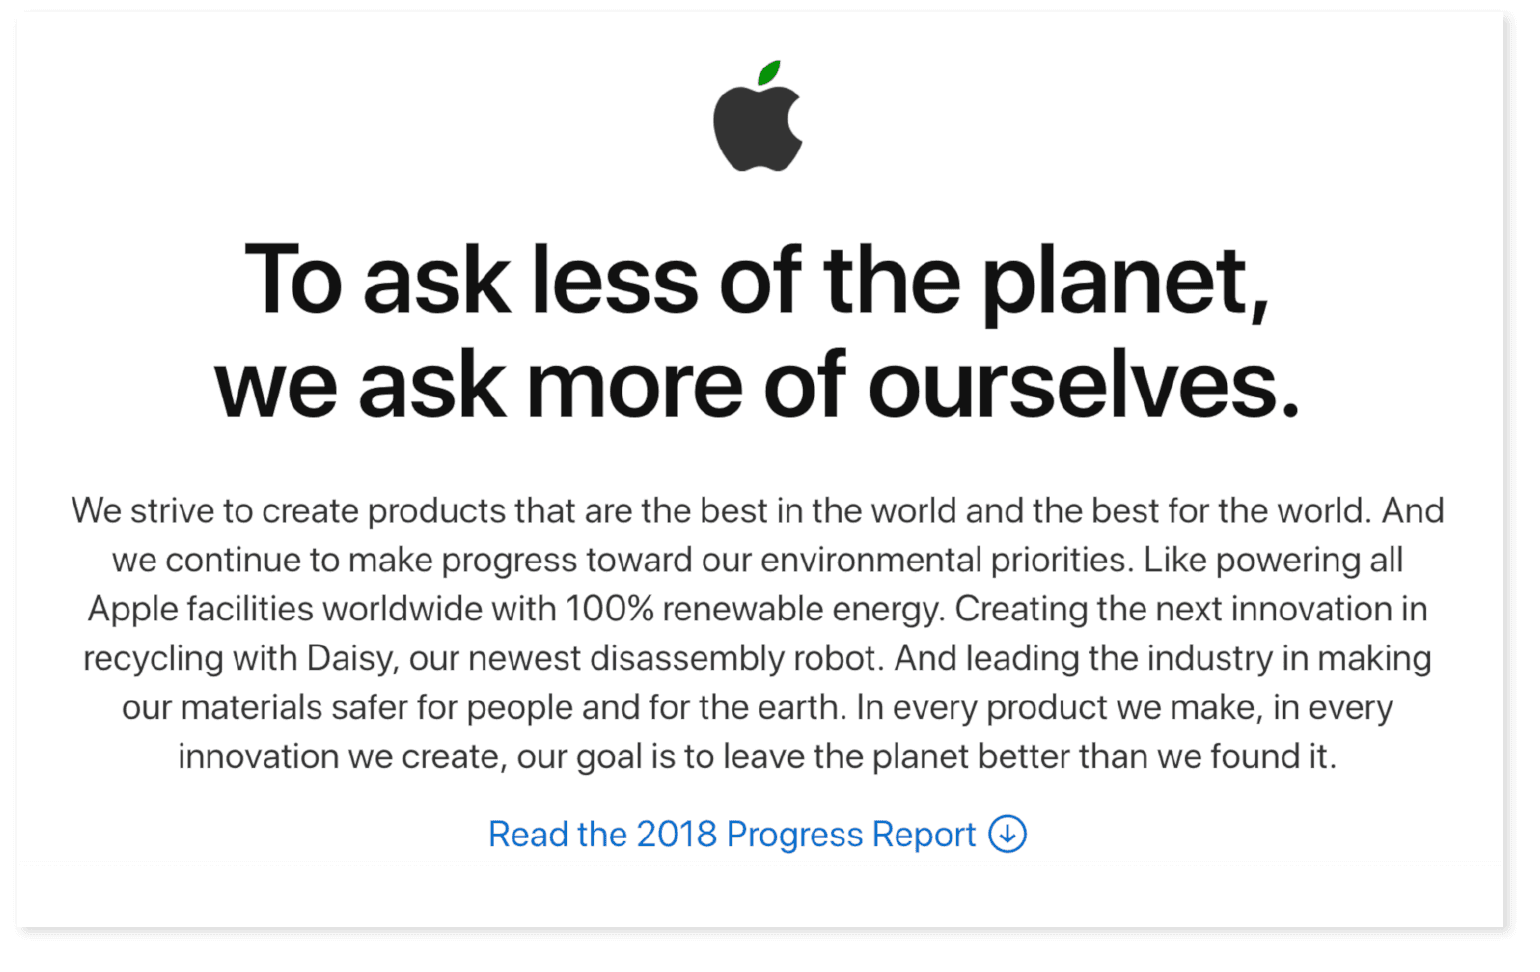 Apple Environmental PR Campaign Example